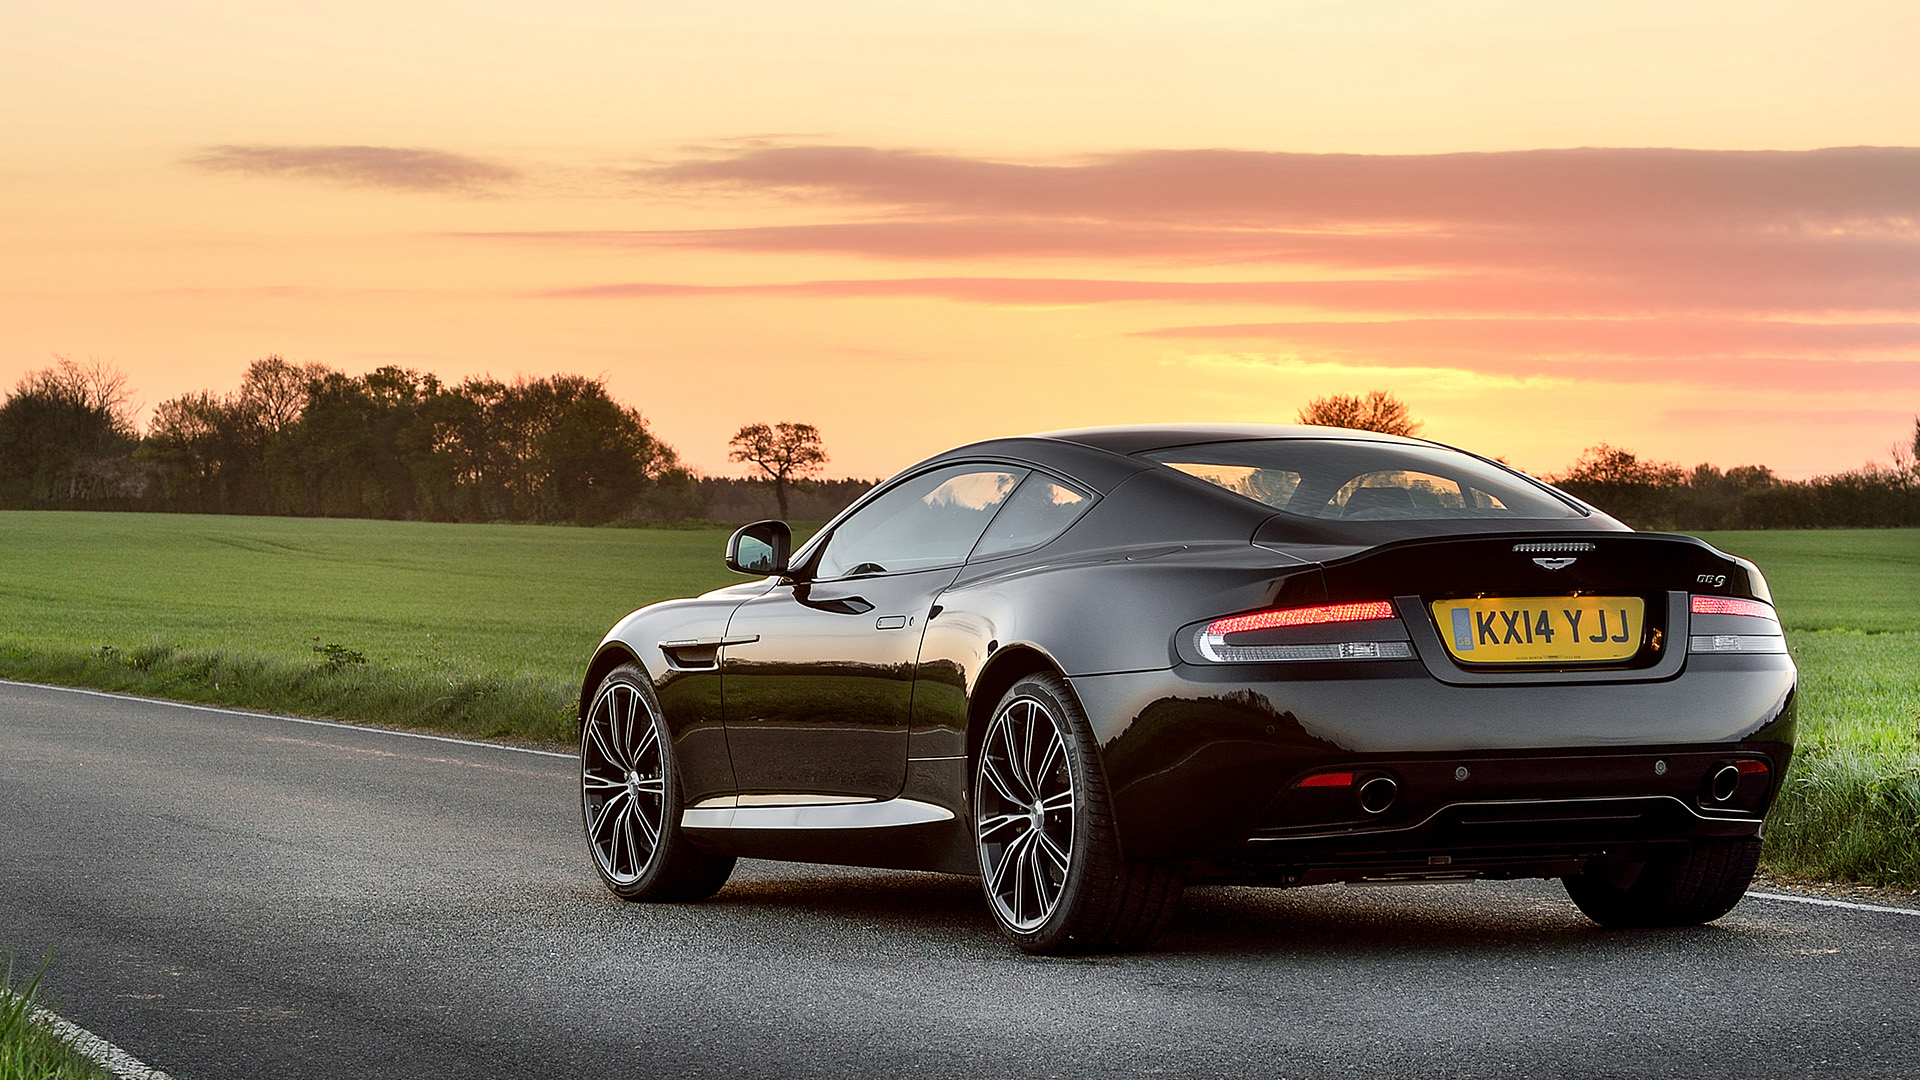  2015 Aston Martin DB9 Carbon Edition Wallpaper.